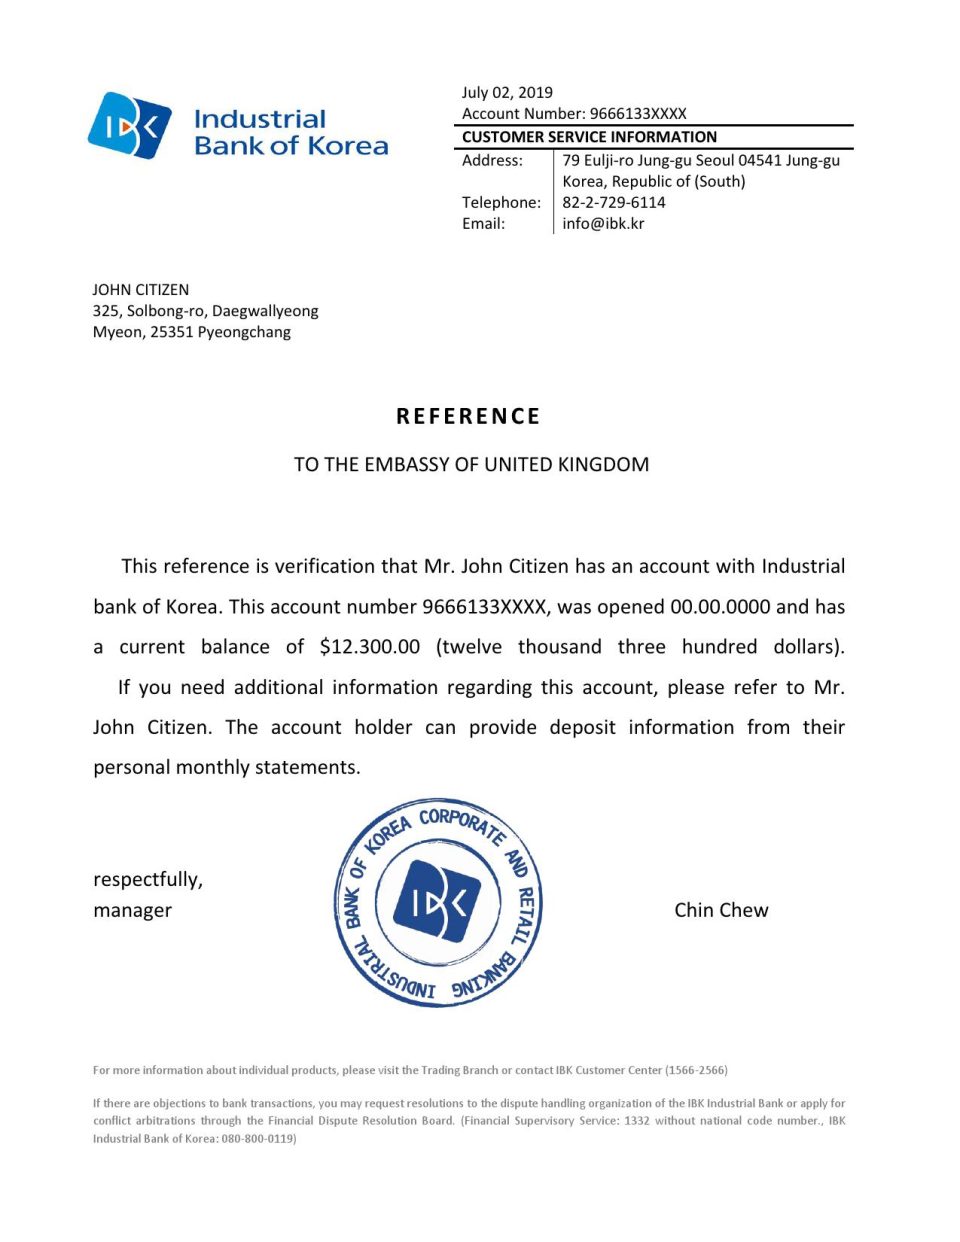 Download Korea Industrial Bank of Korea Bank Reference Letter Templates | Editable Word